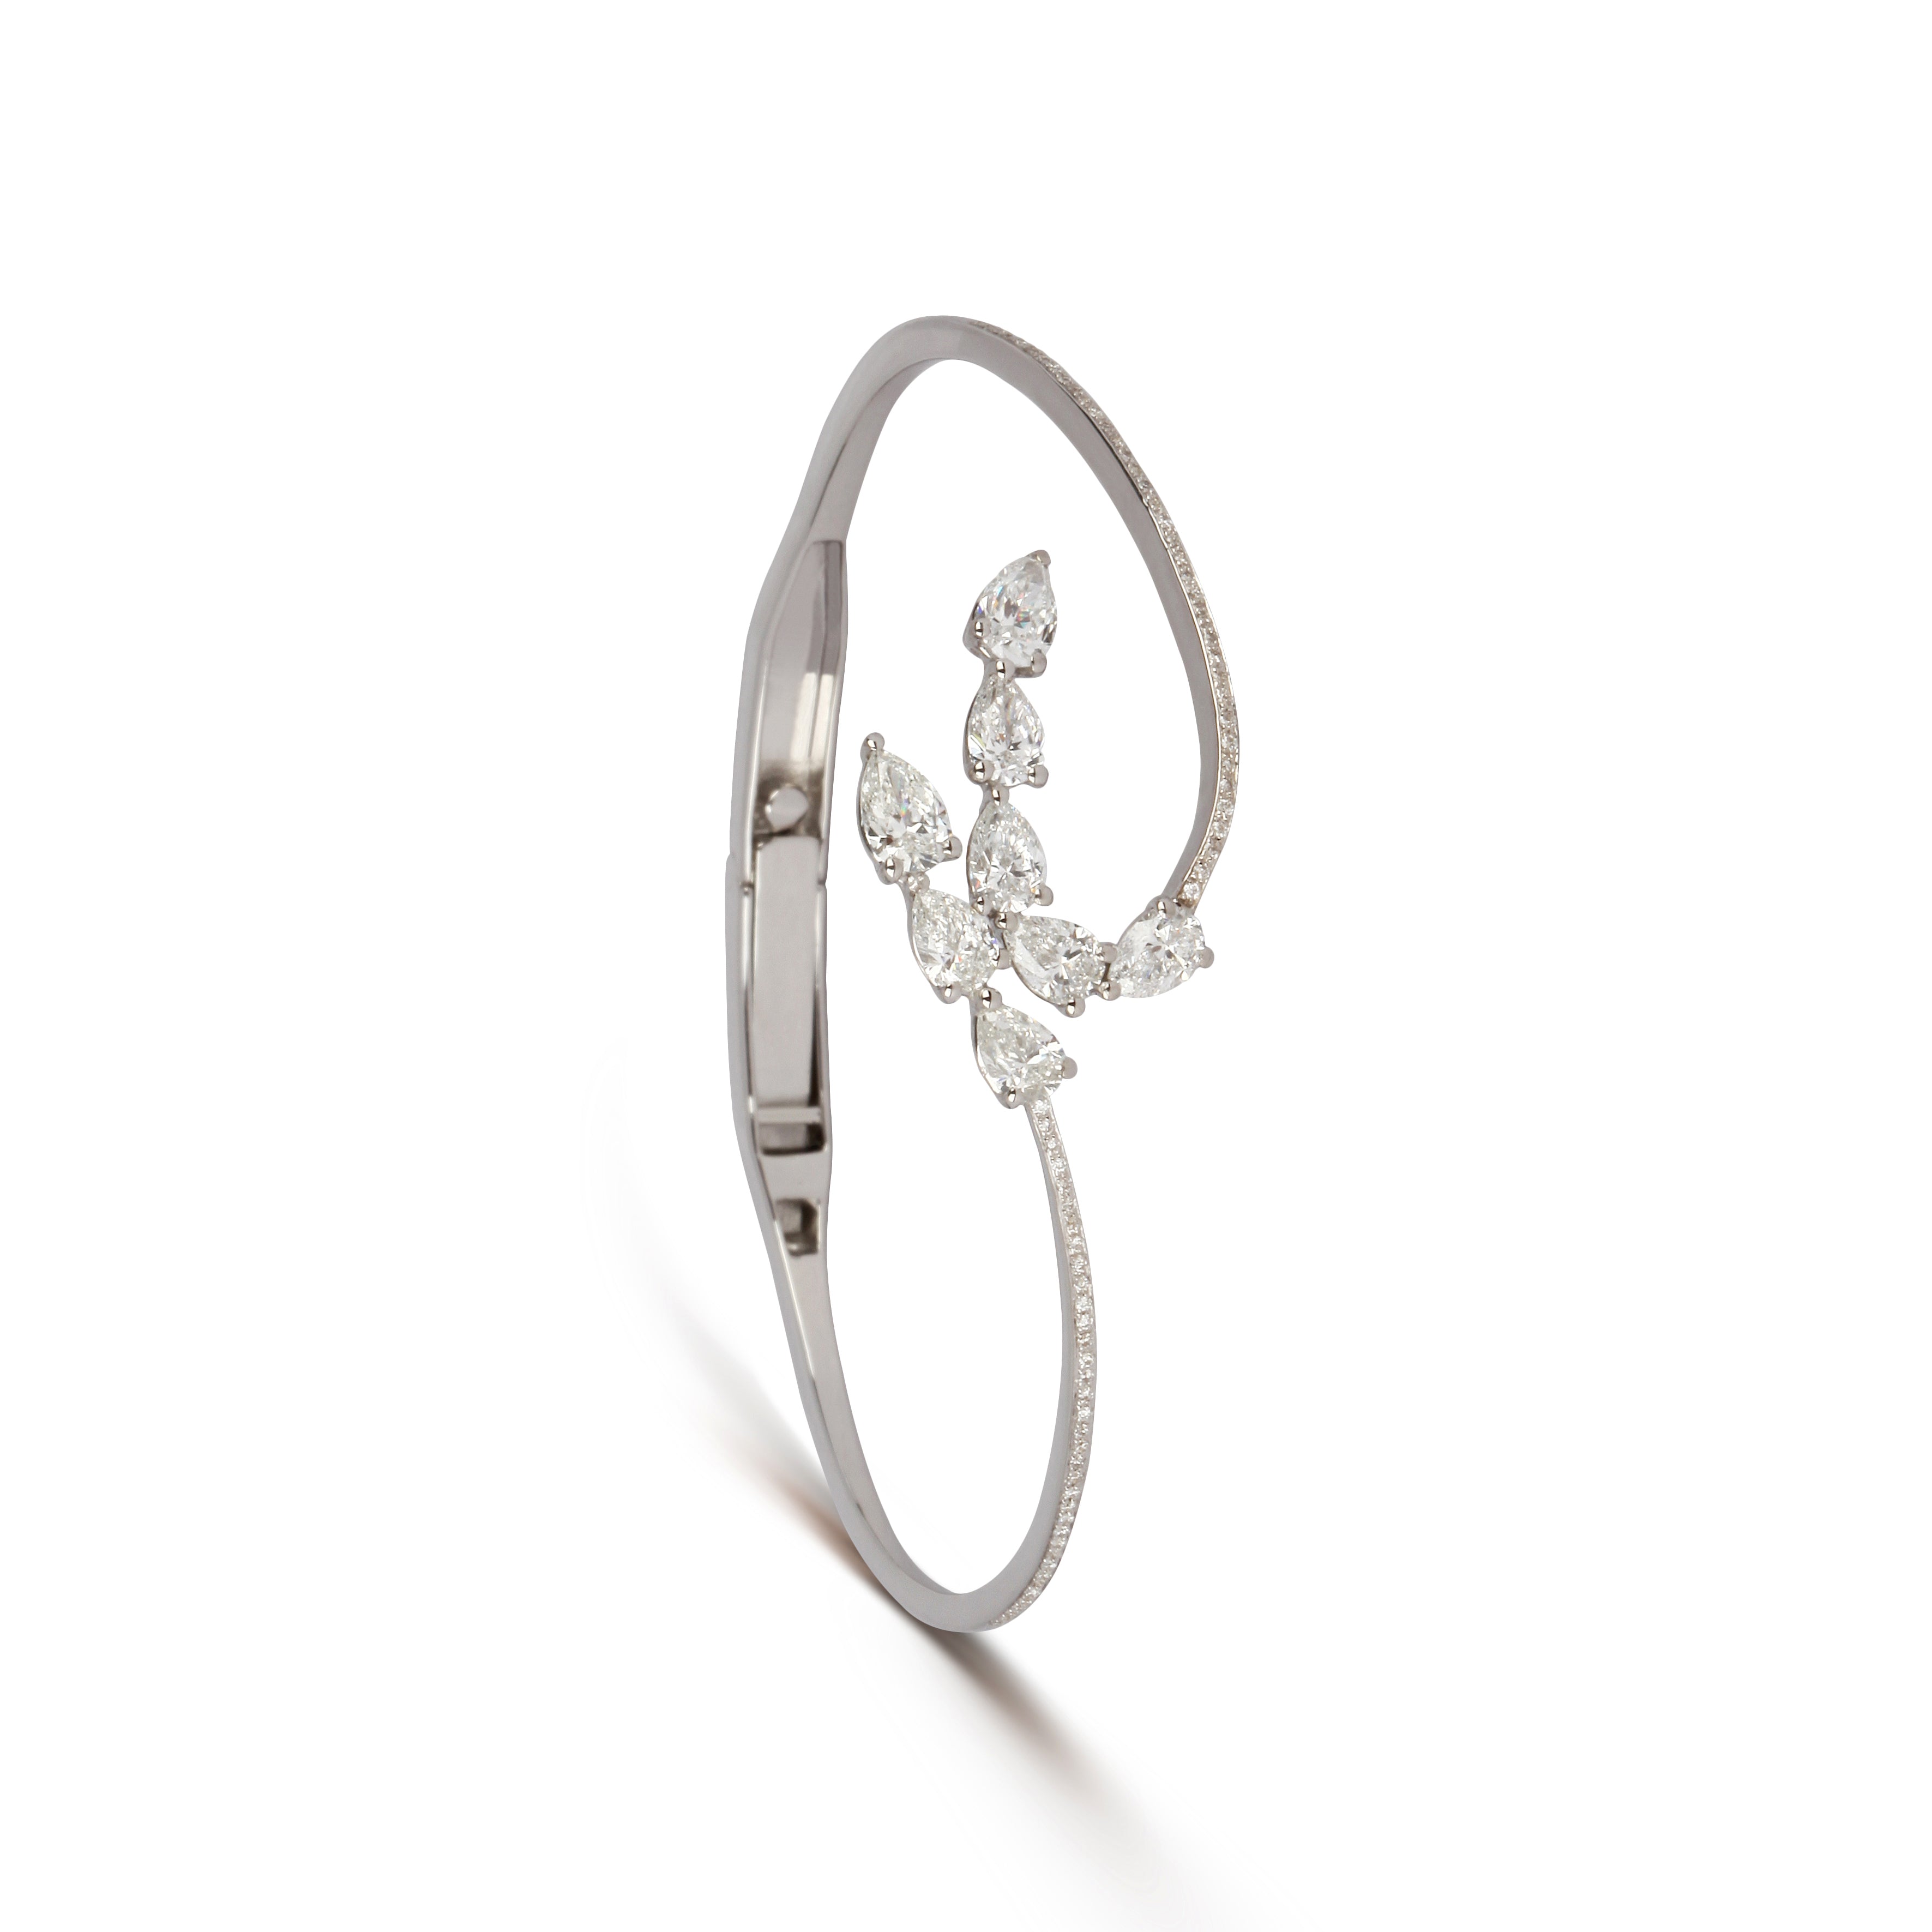 Swirled Diamond Cuff Bracelet | Bracelet Design | Buy Jewellery Online